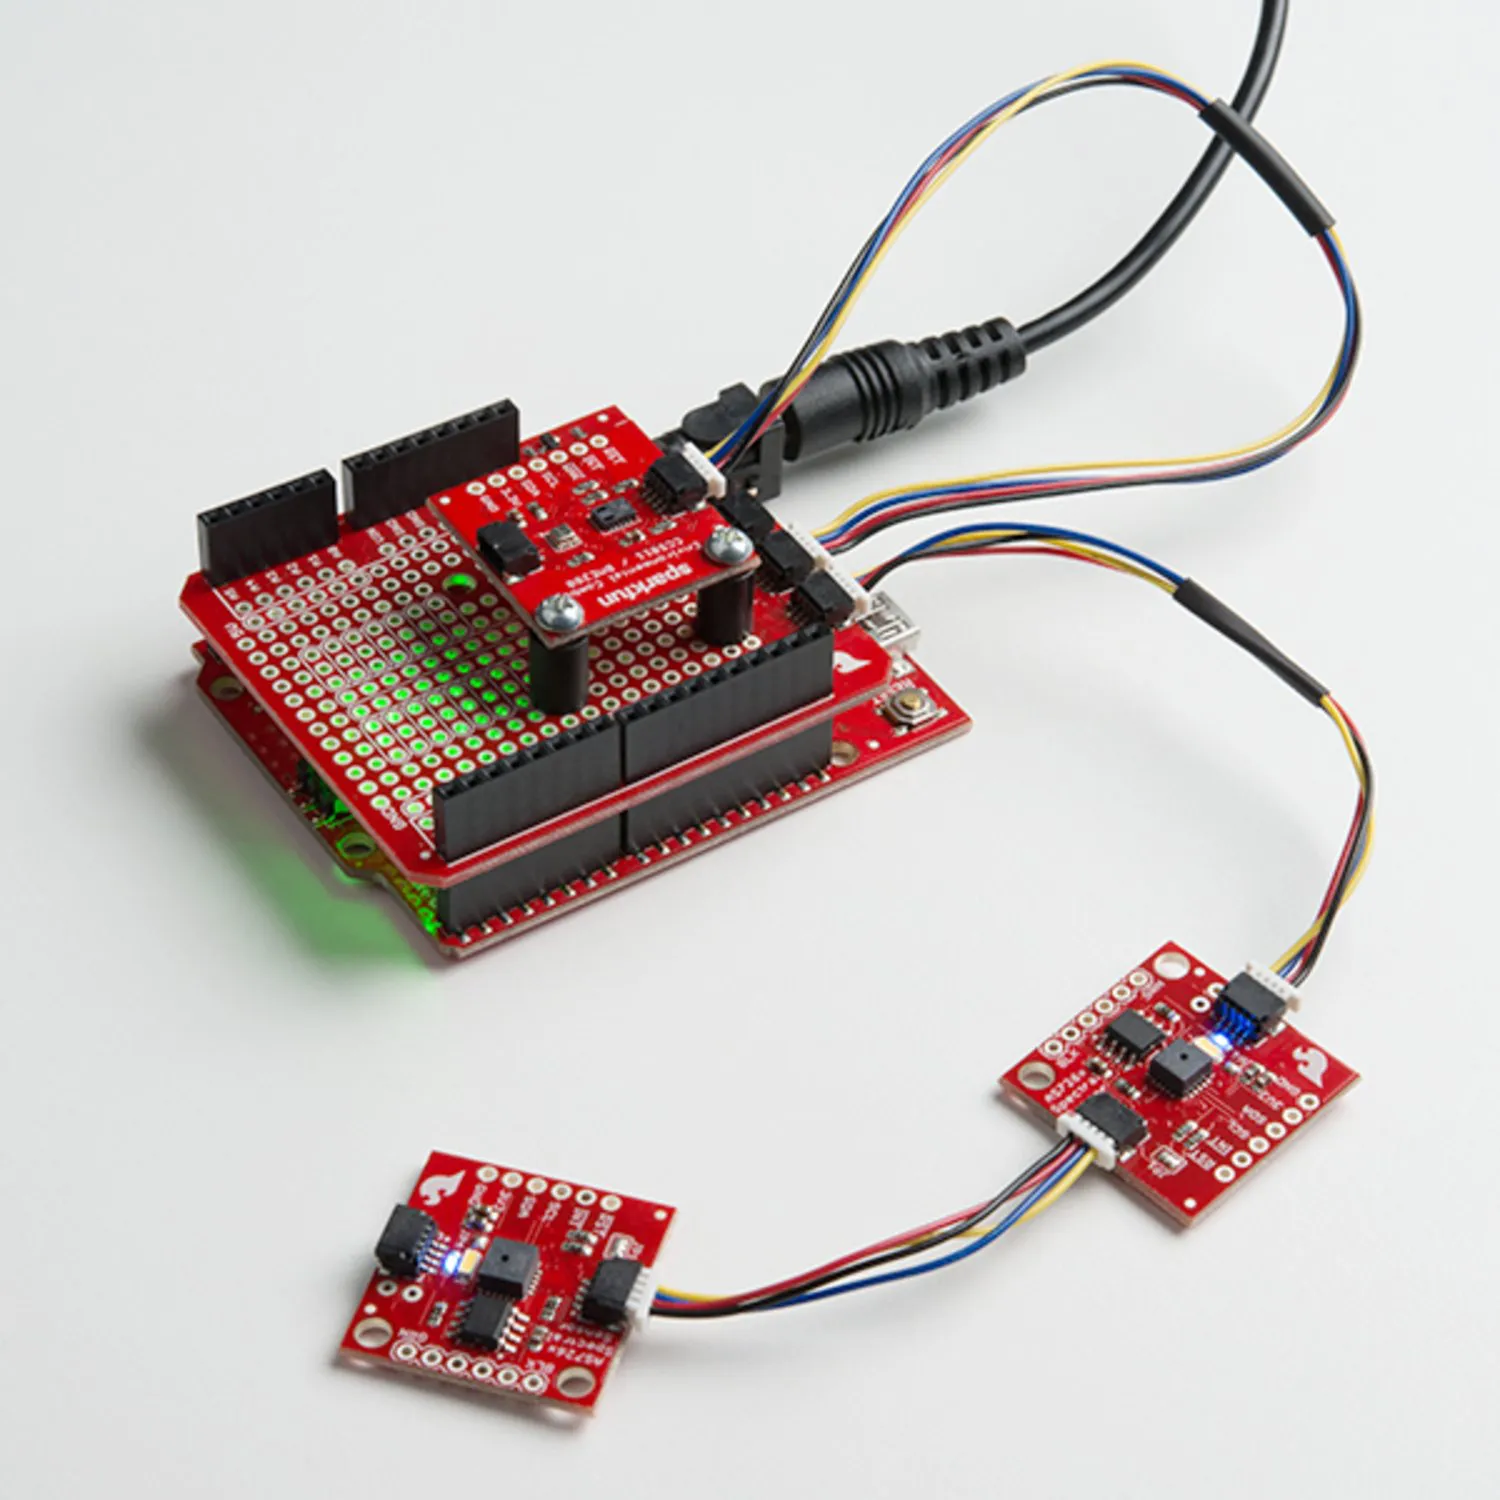 Photo of SparkFun Qwiic Shield for Arduino